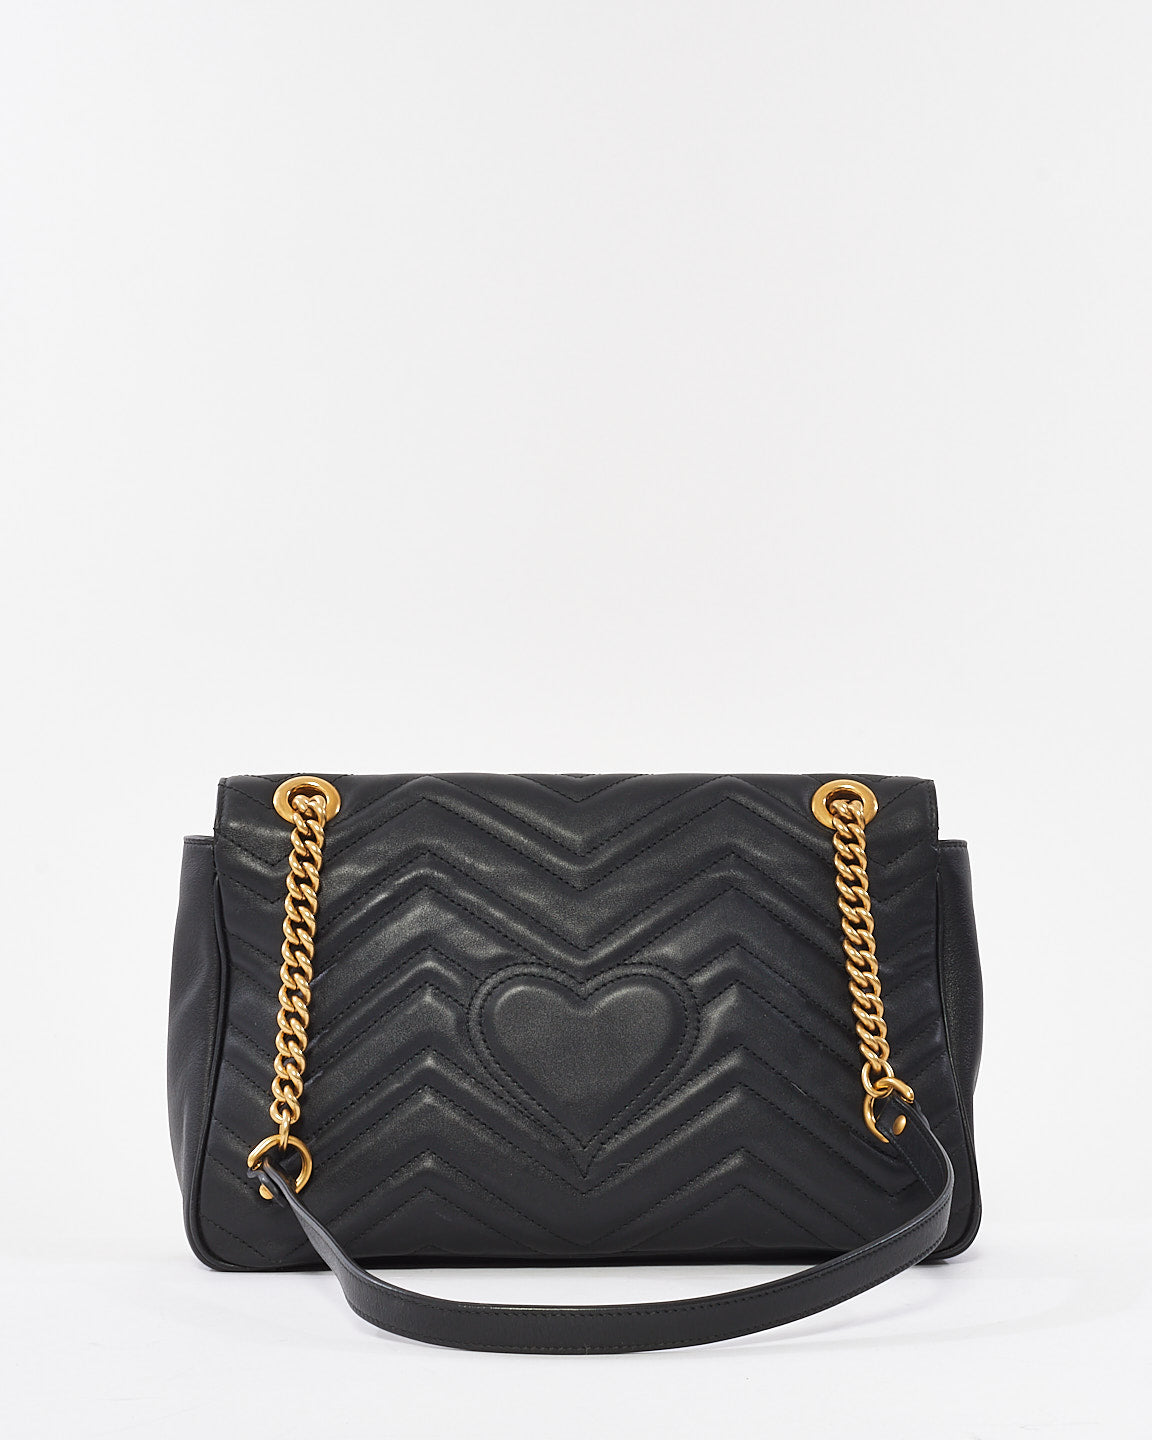 Gucci Black Leather Marmont Medium Flap Shoulder Bag